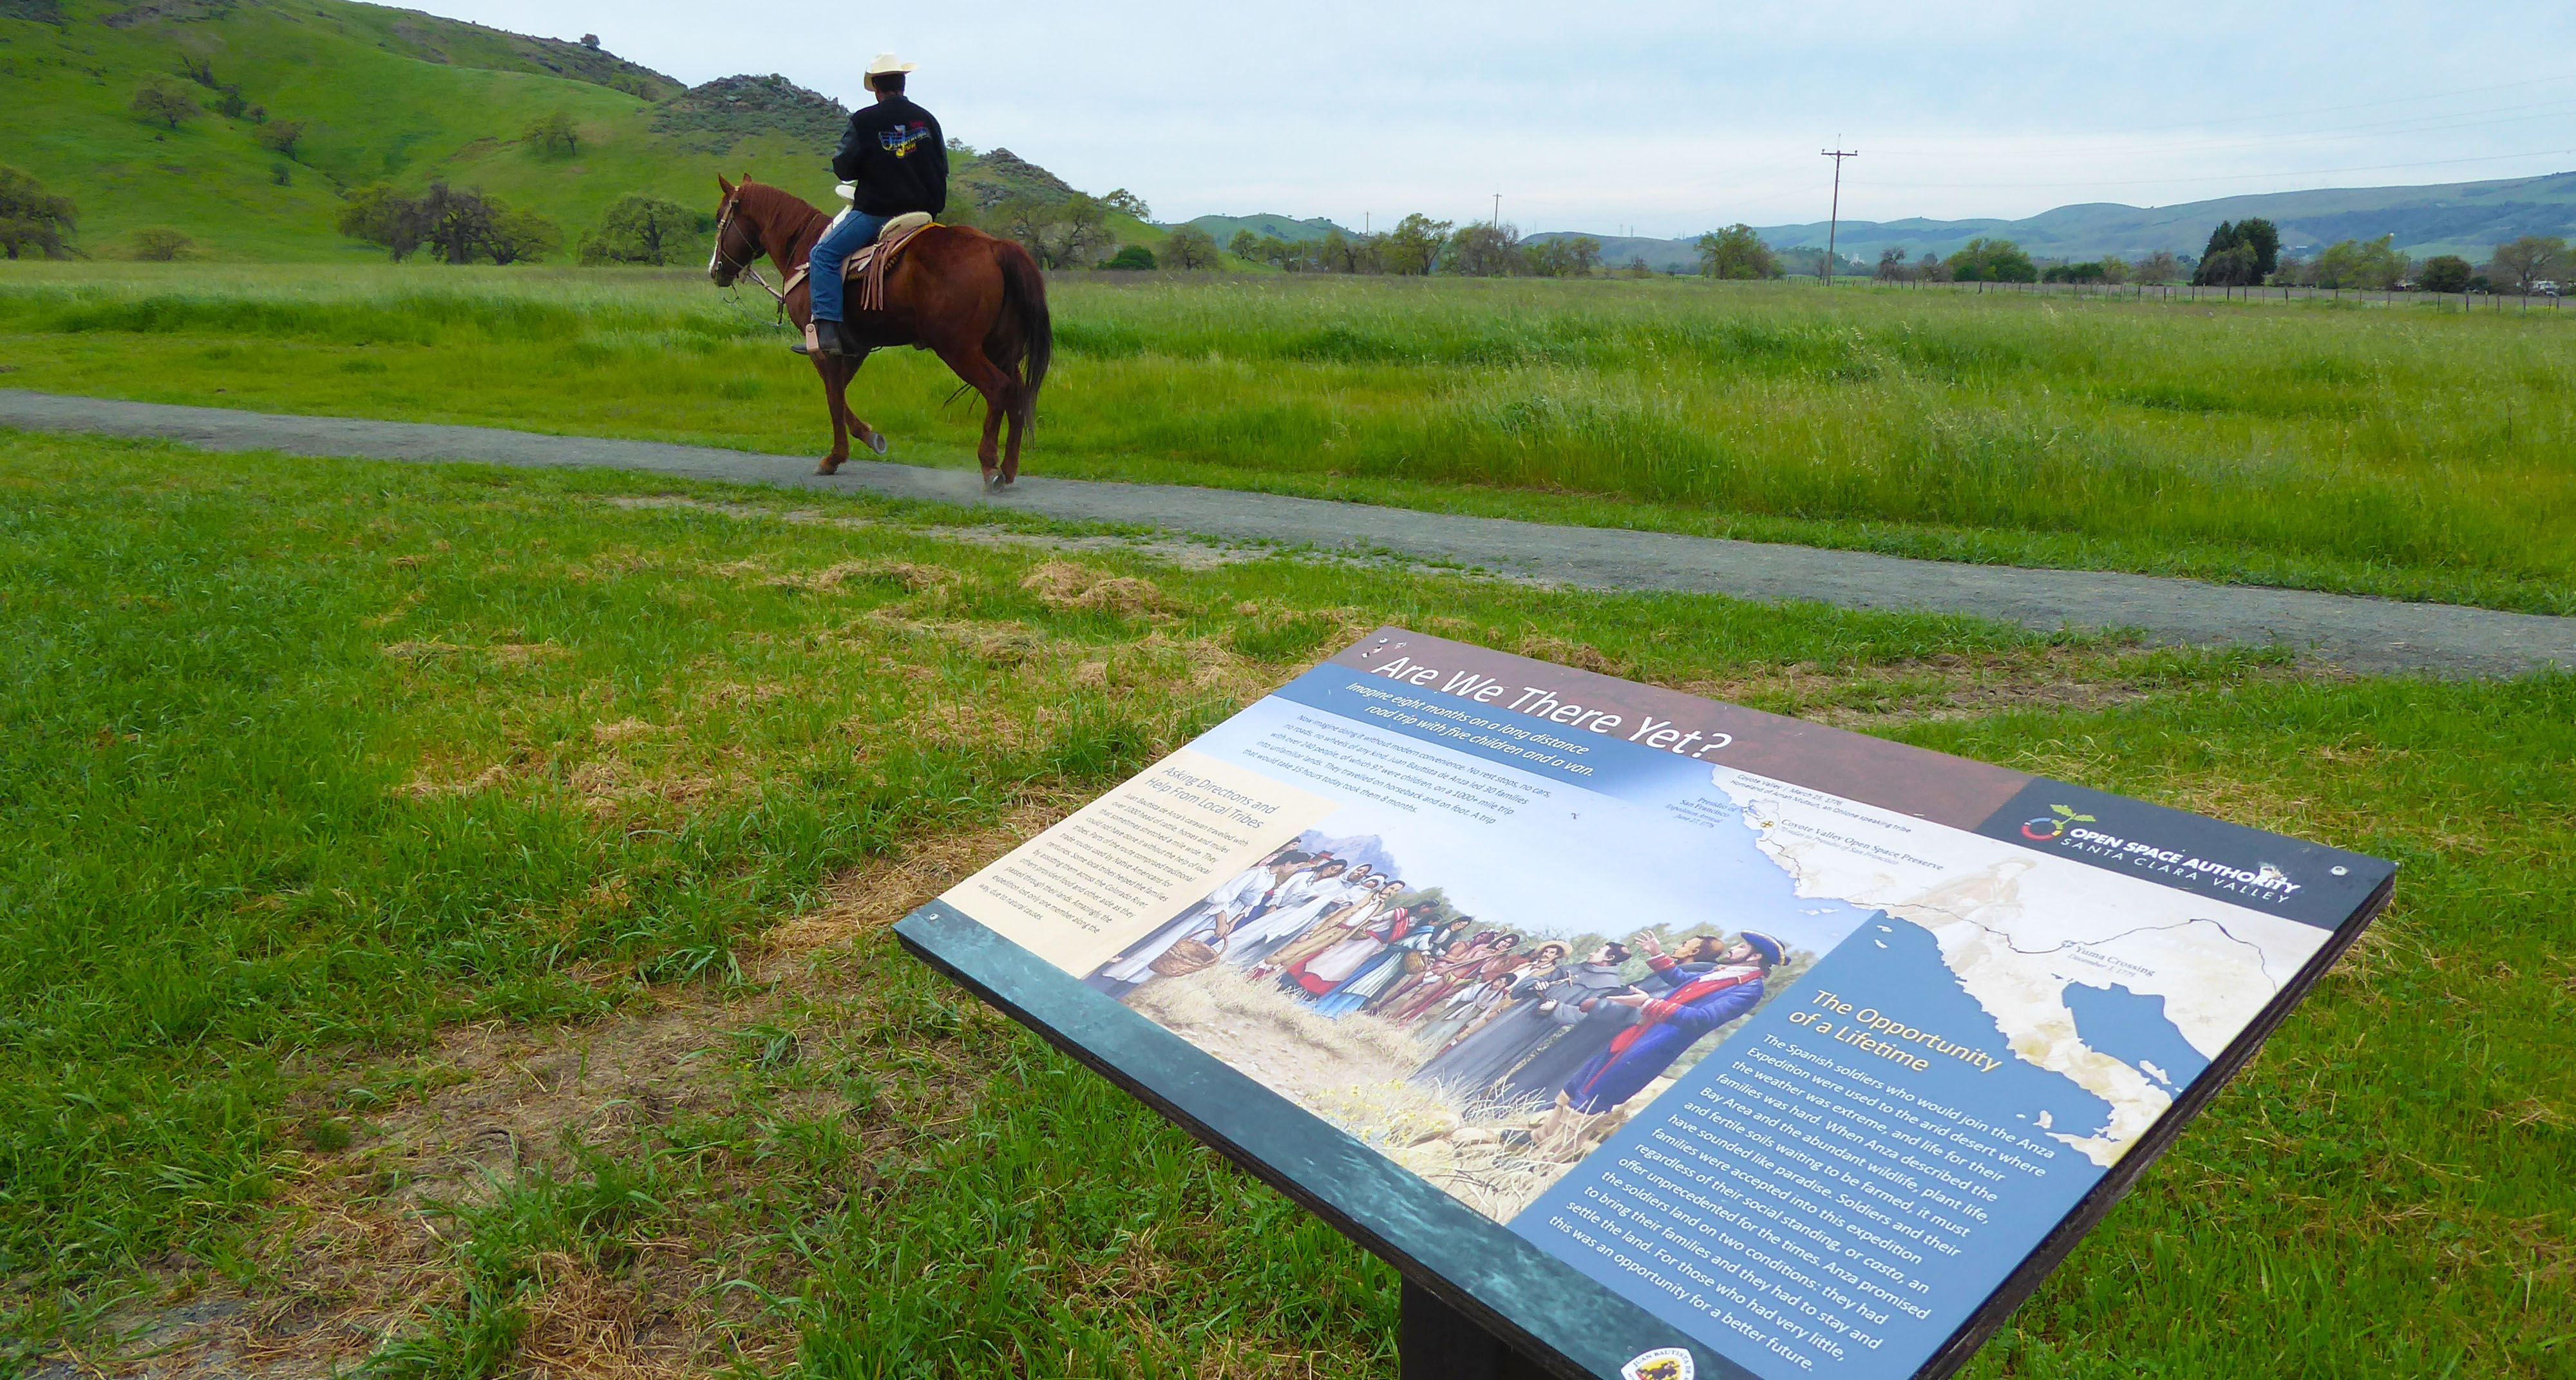 Interpretive panel on the De Anza Expedition, horseback rider in background